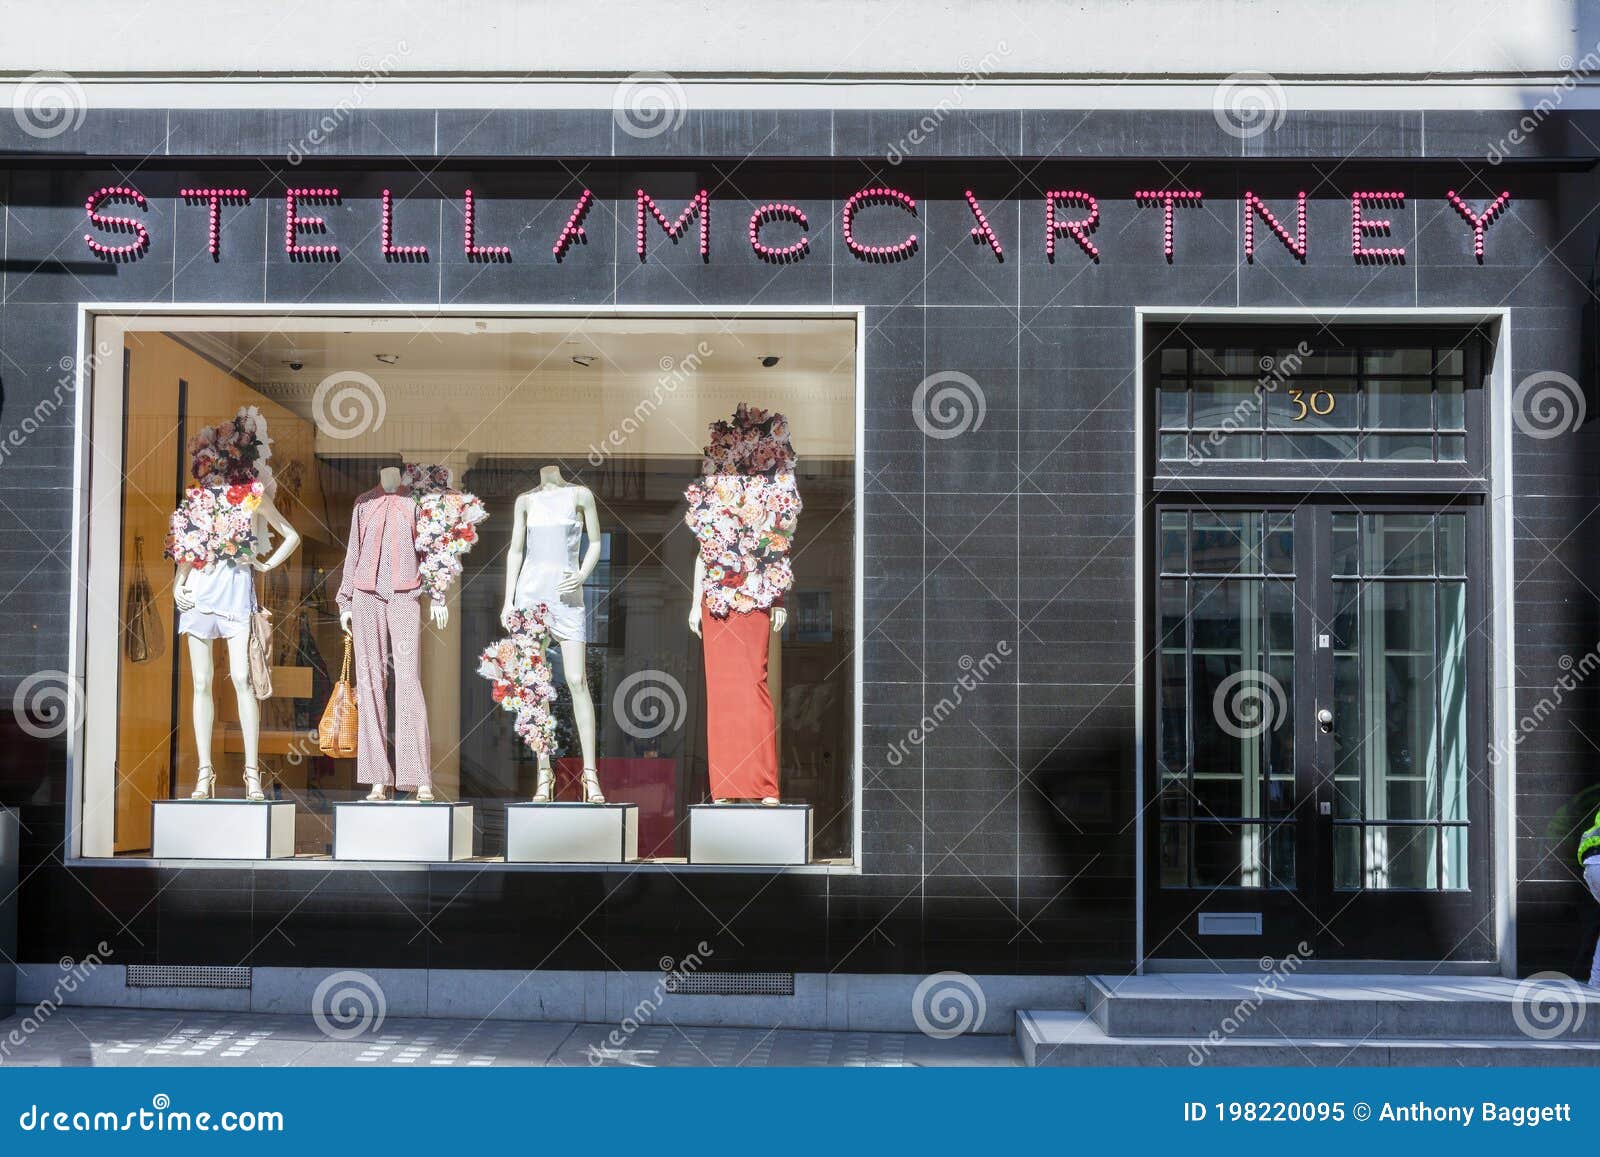 Stella McCartney Fashion Designer Shop Editorial Image - Image of ...